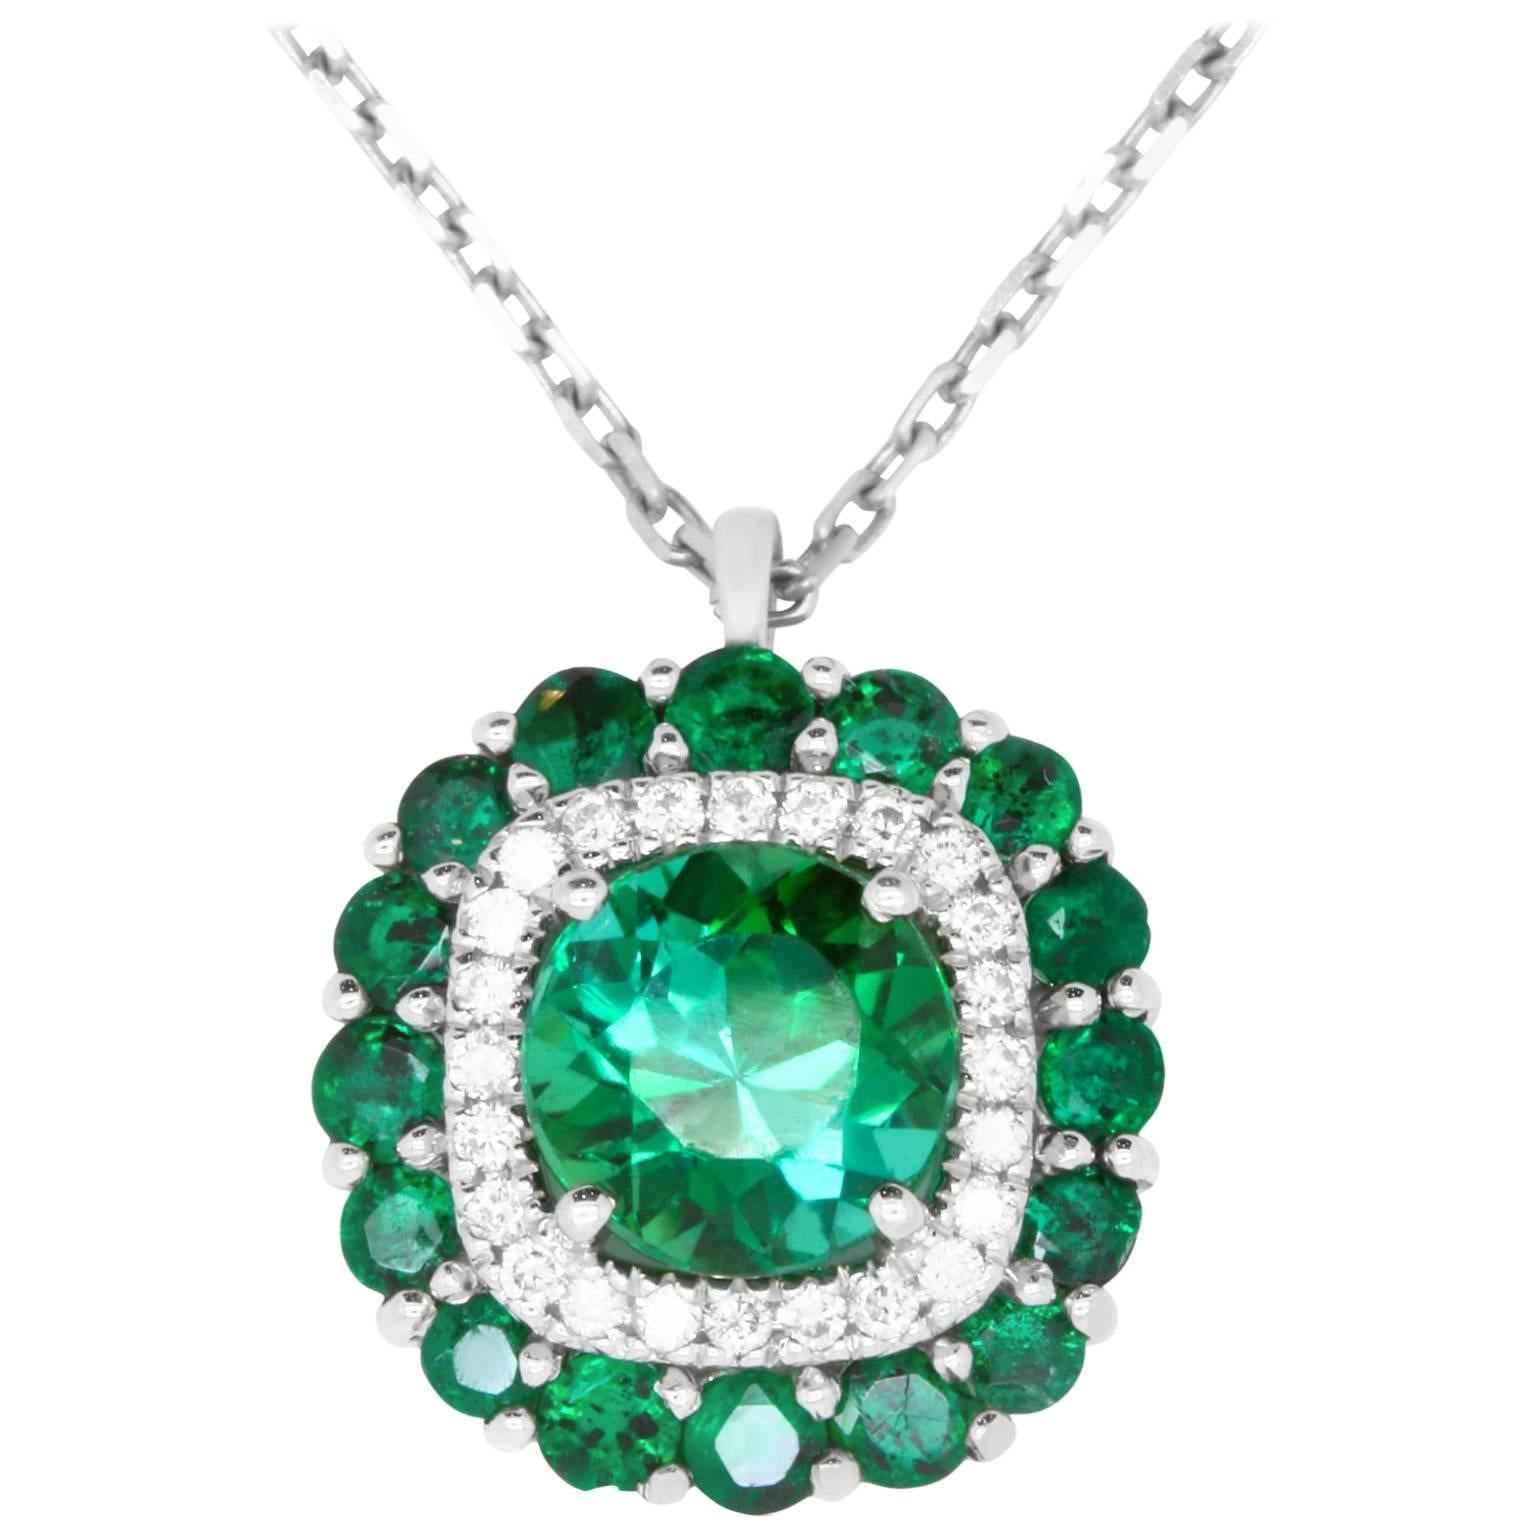 1.79 Carat Green Tourmaline, Emerald and White Diamond Pendant